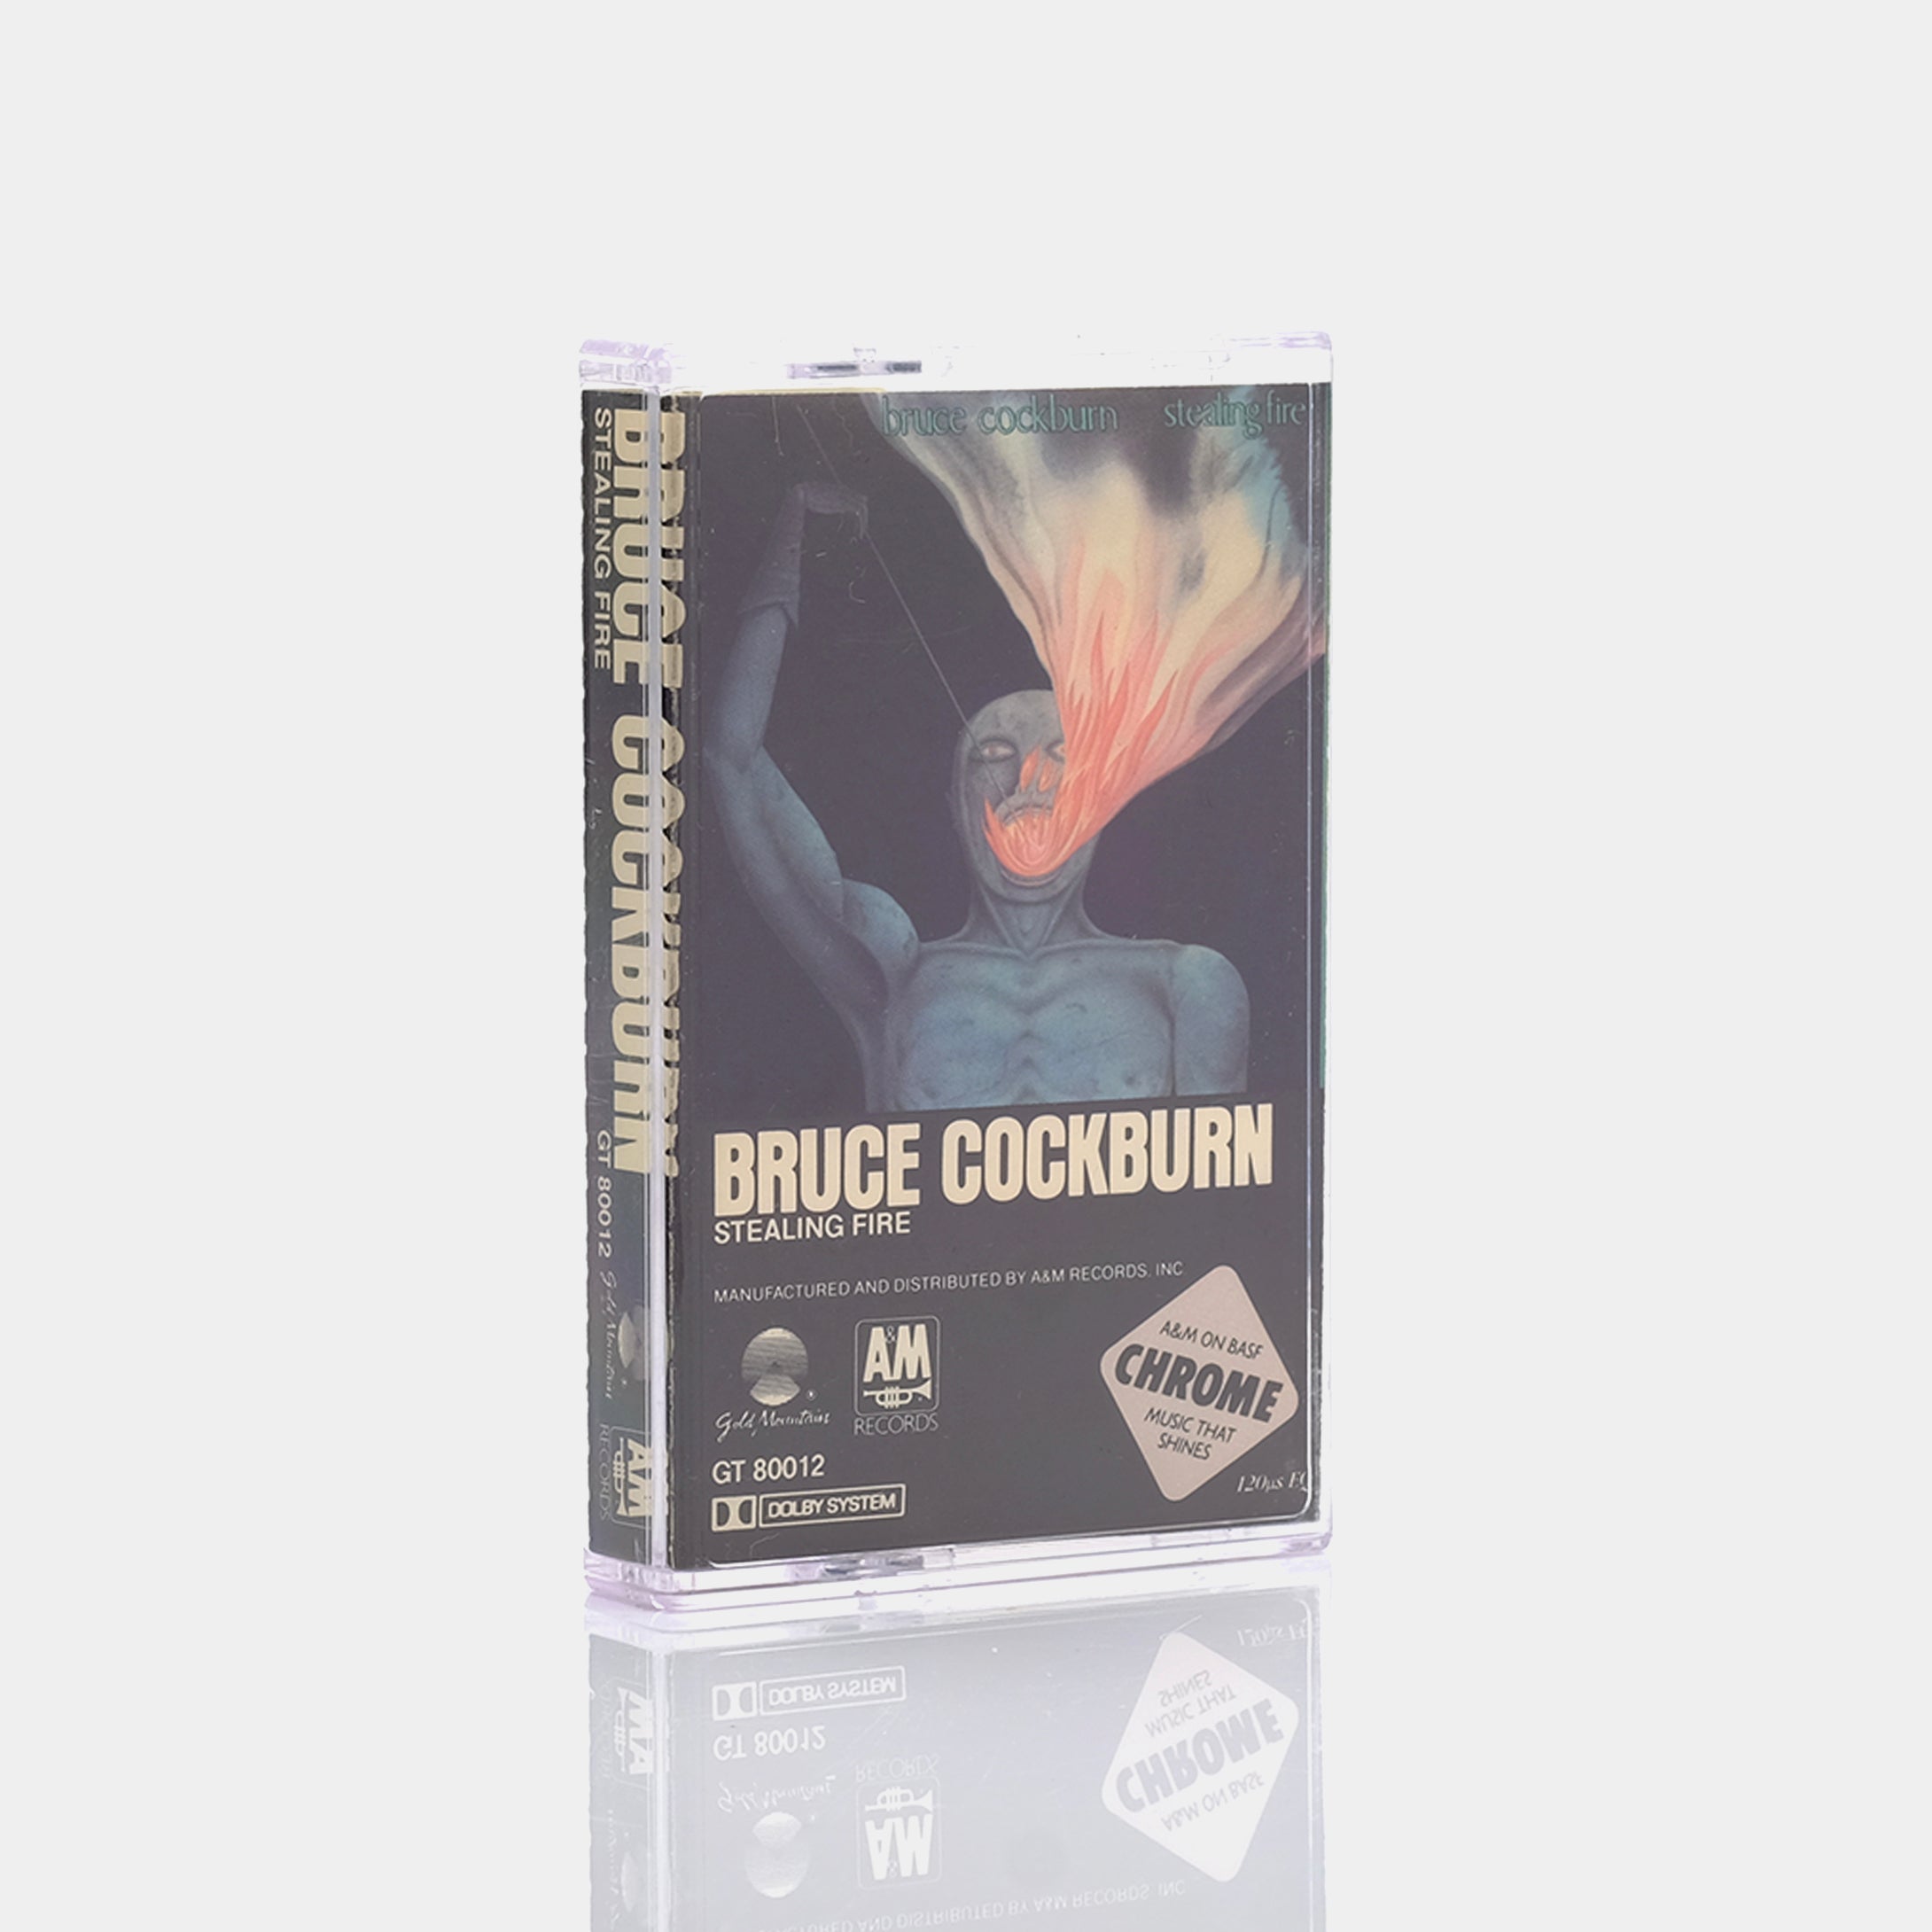 Bruce Cockburn  - Stealing Fire Cassette Tape